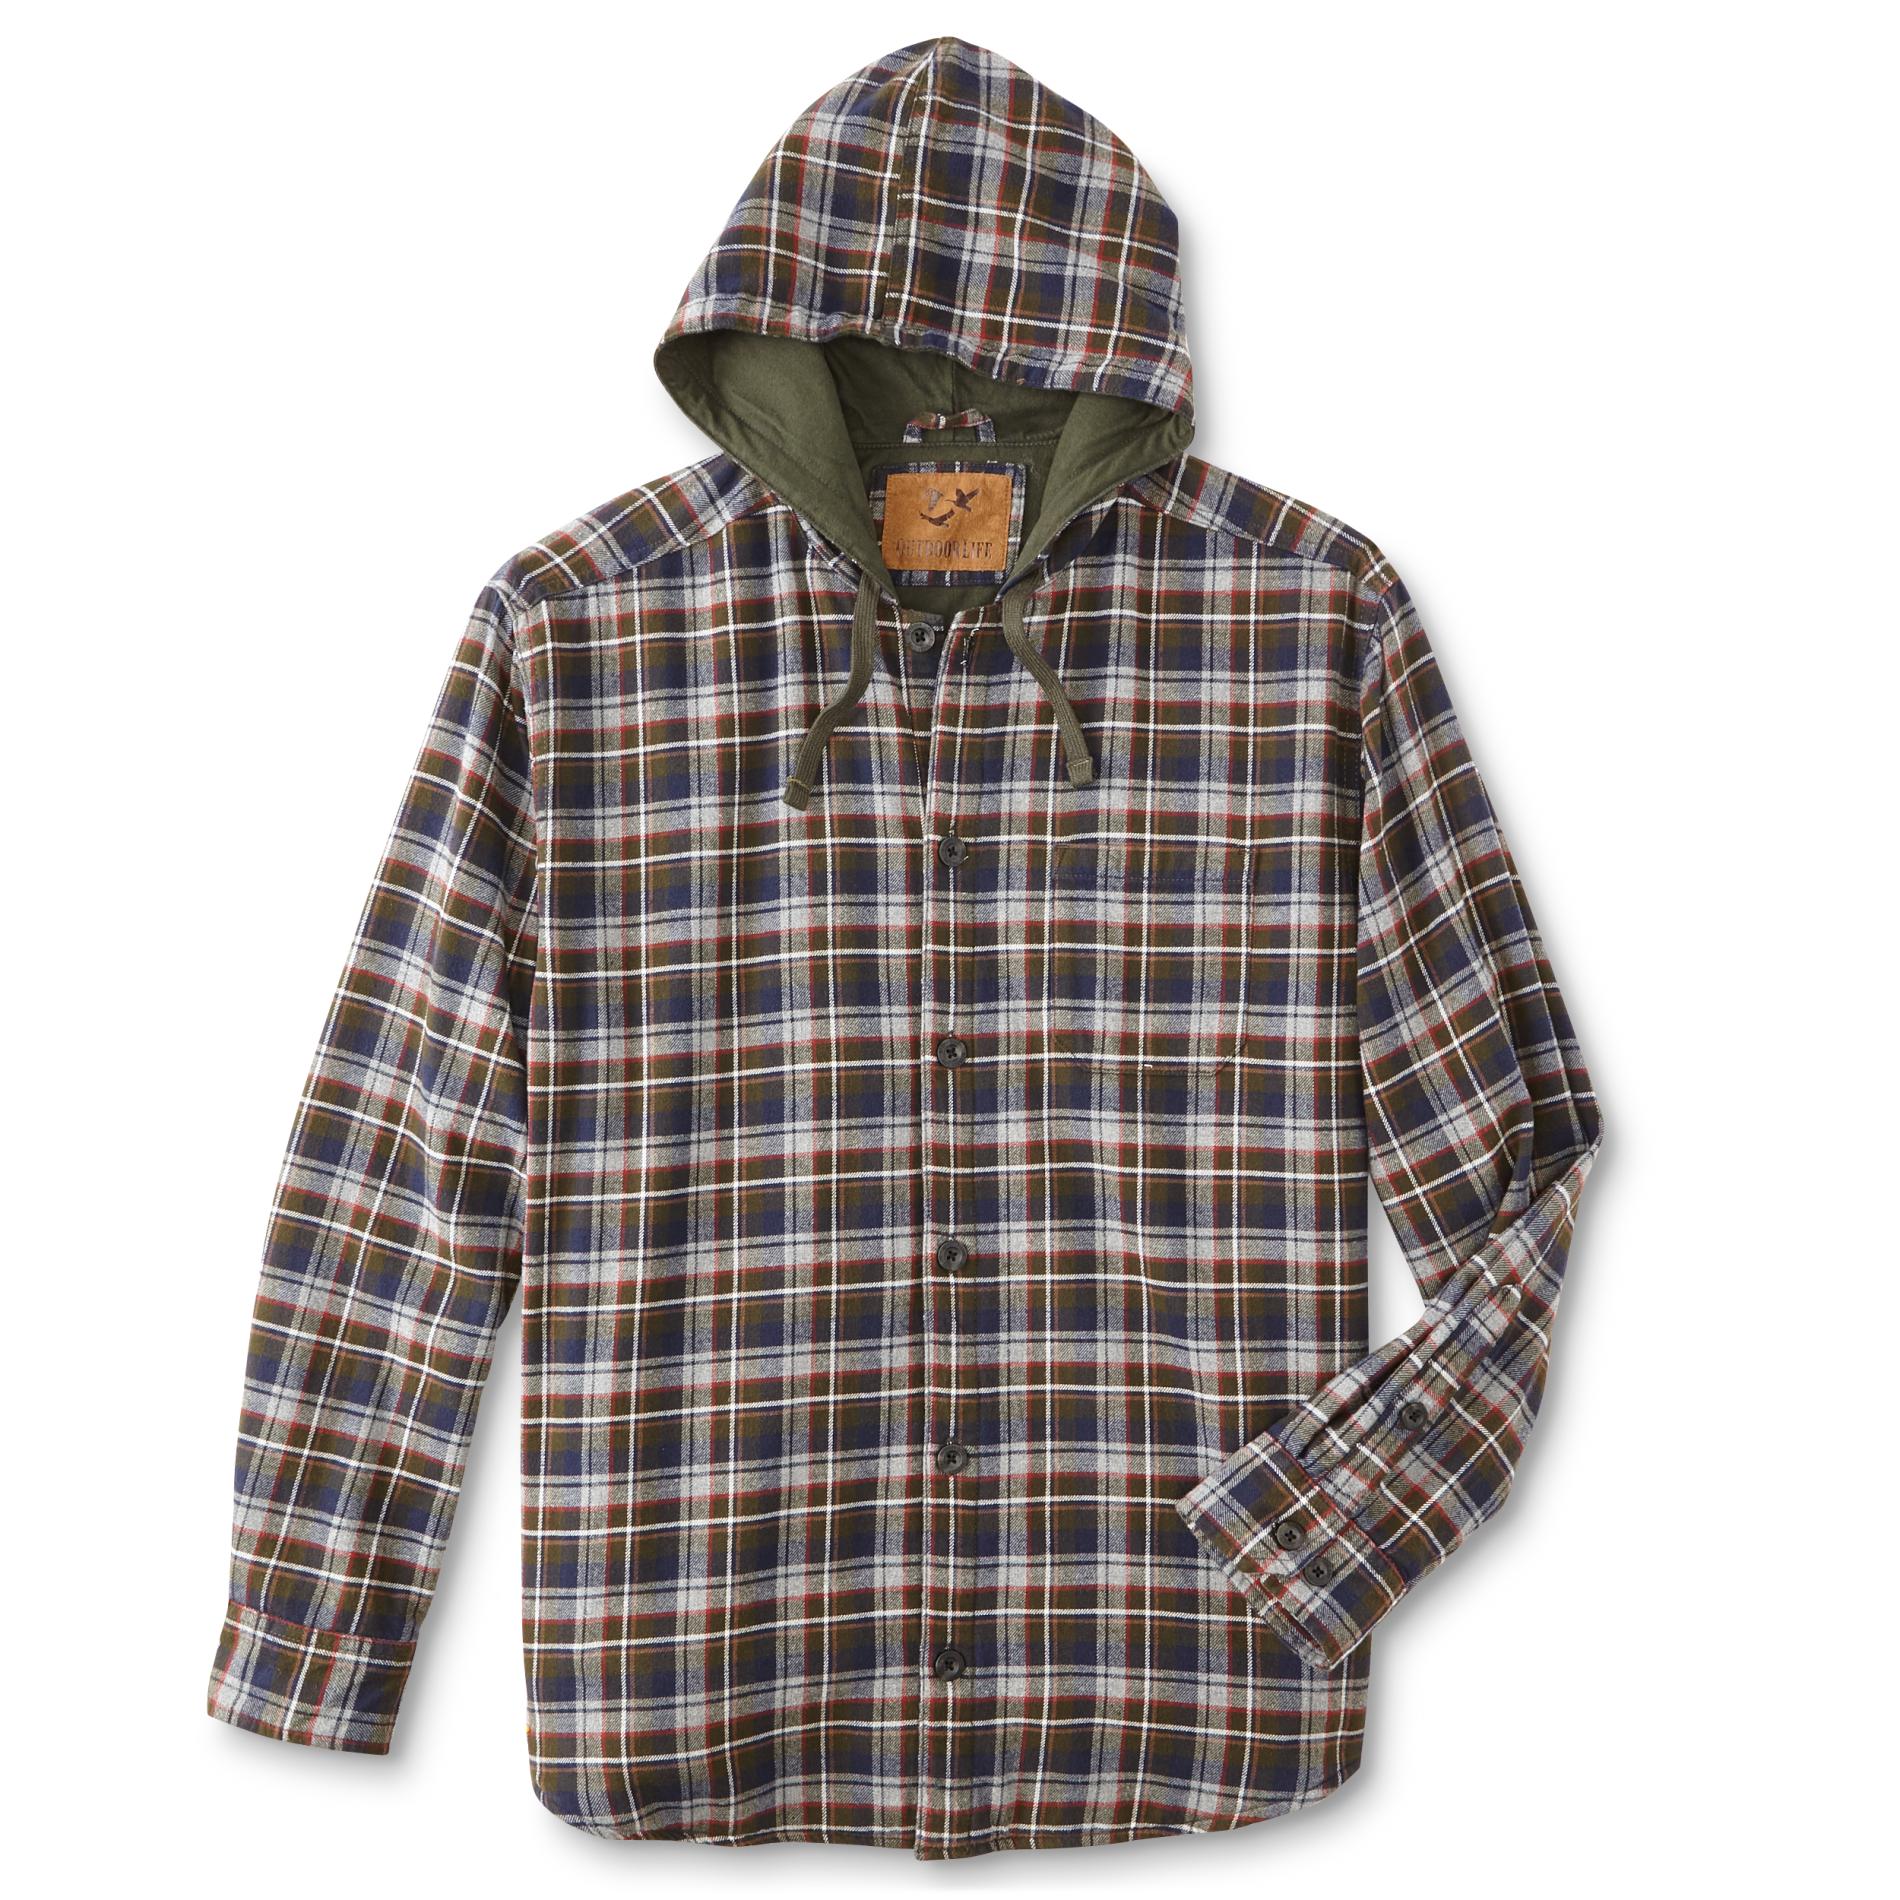 Outdoor Life Men's Hooded Shirt Jacket - Plaid